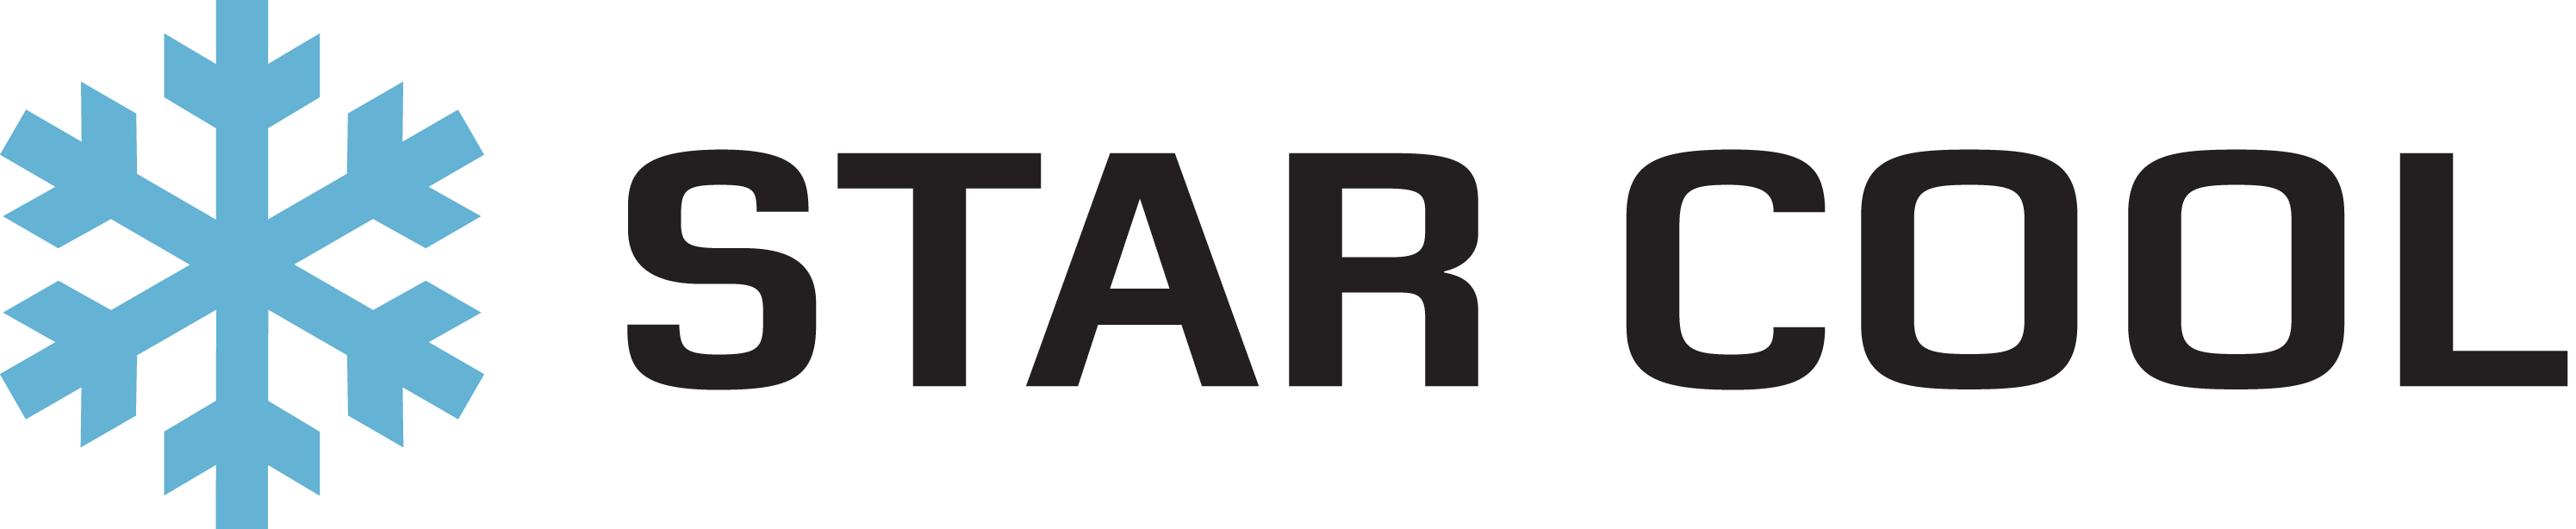 Star-Cool-logo-ordinary